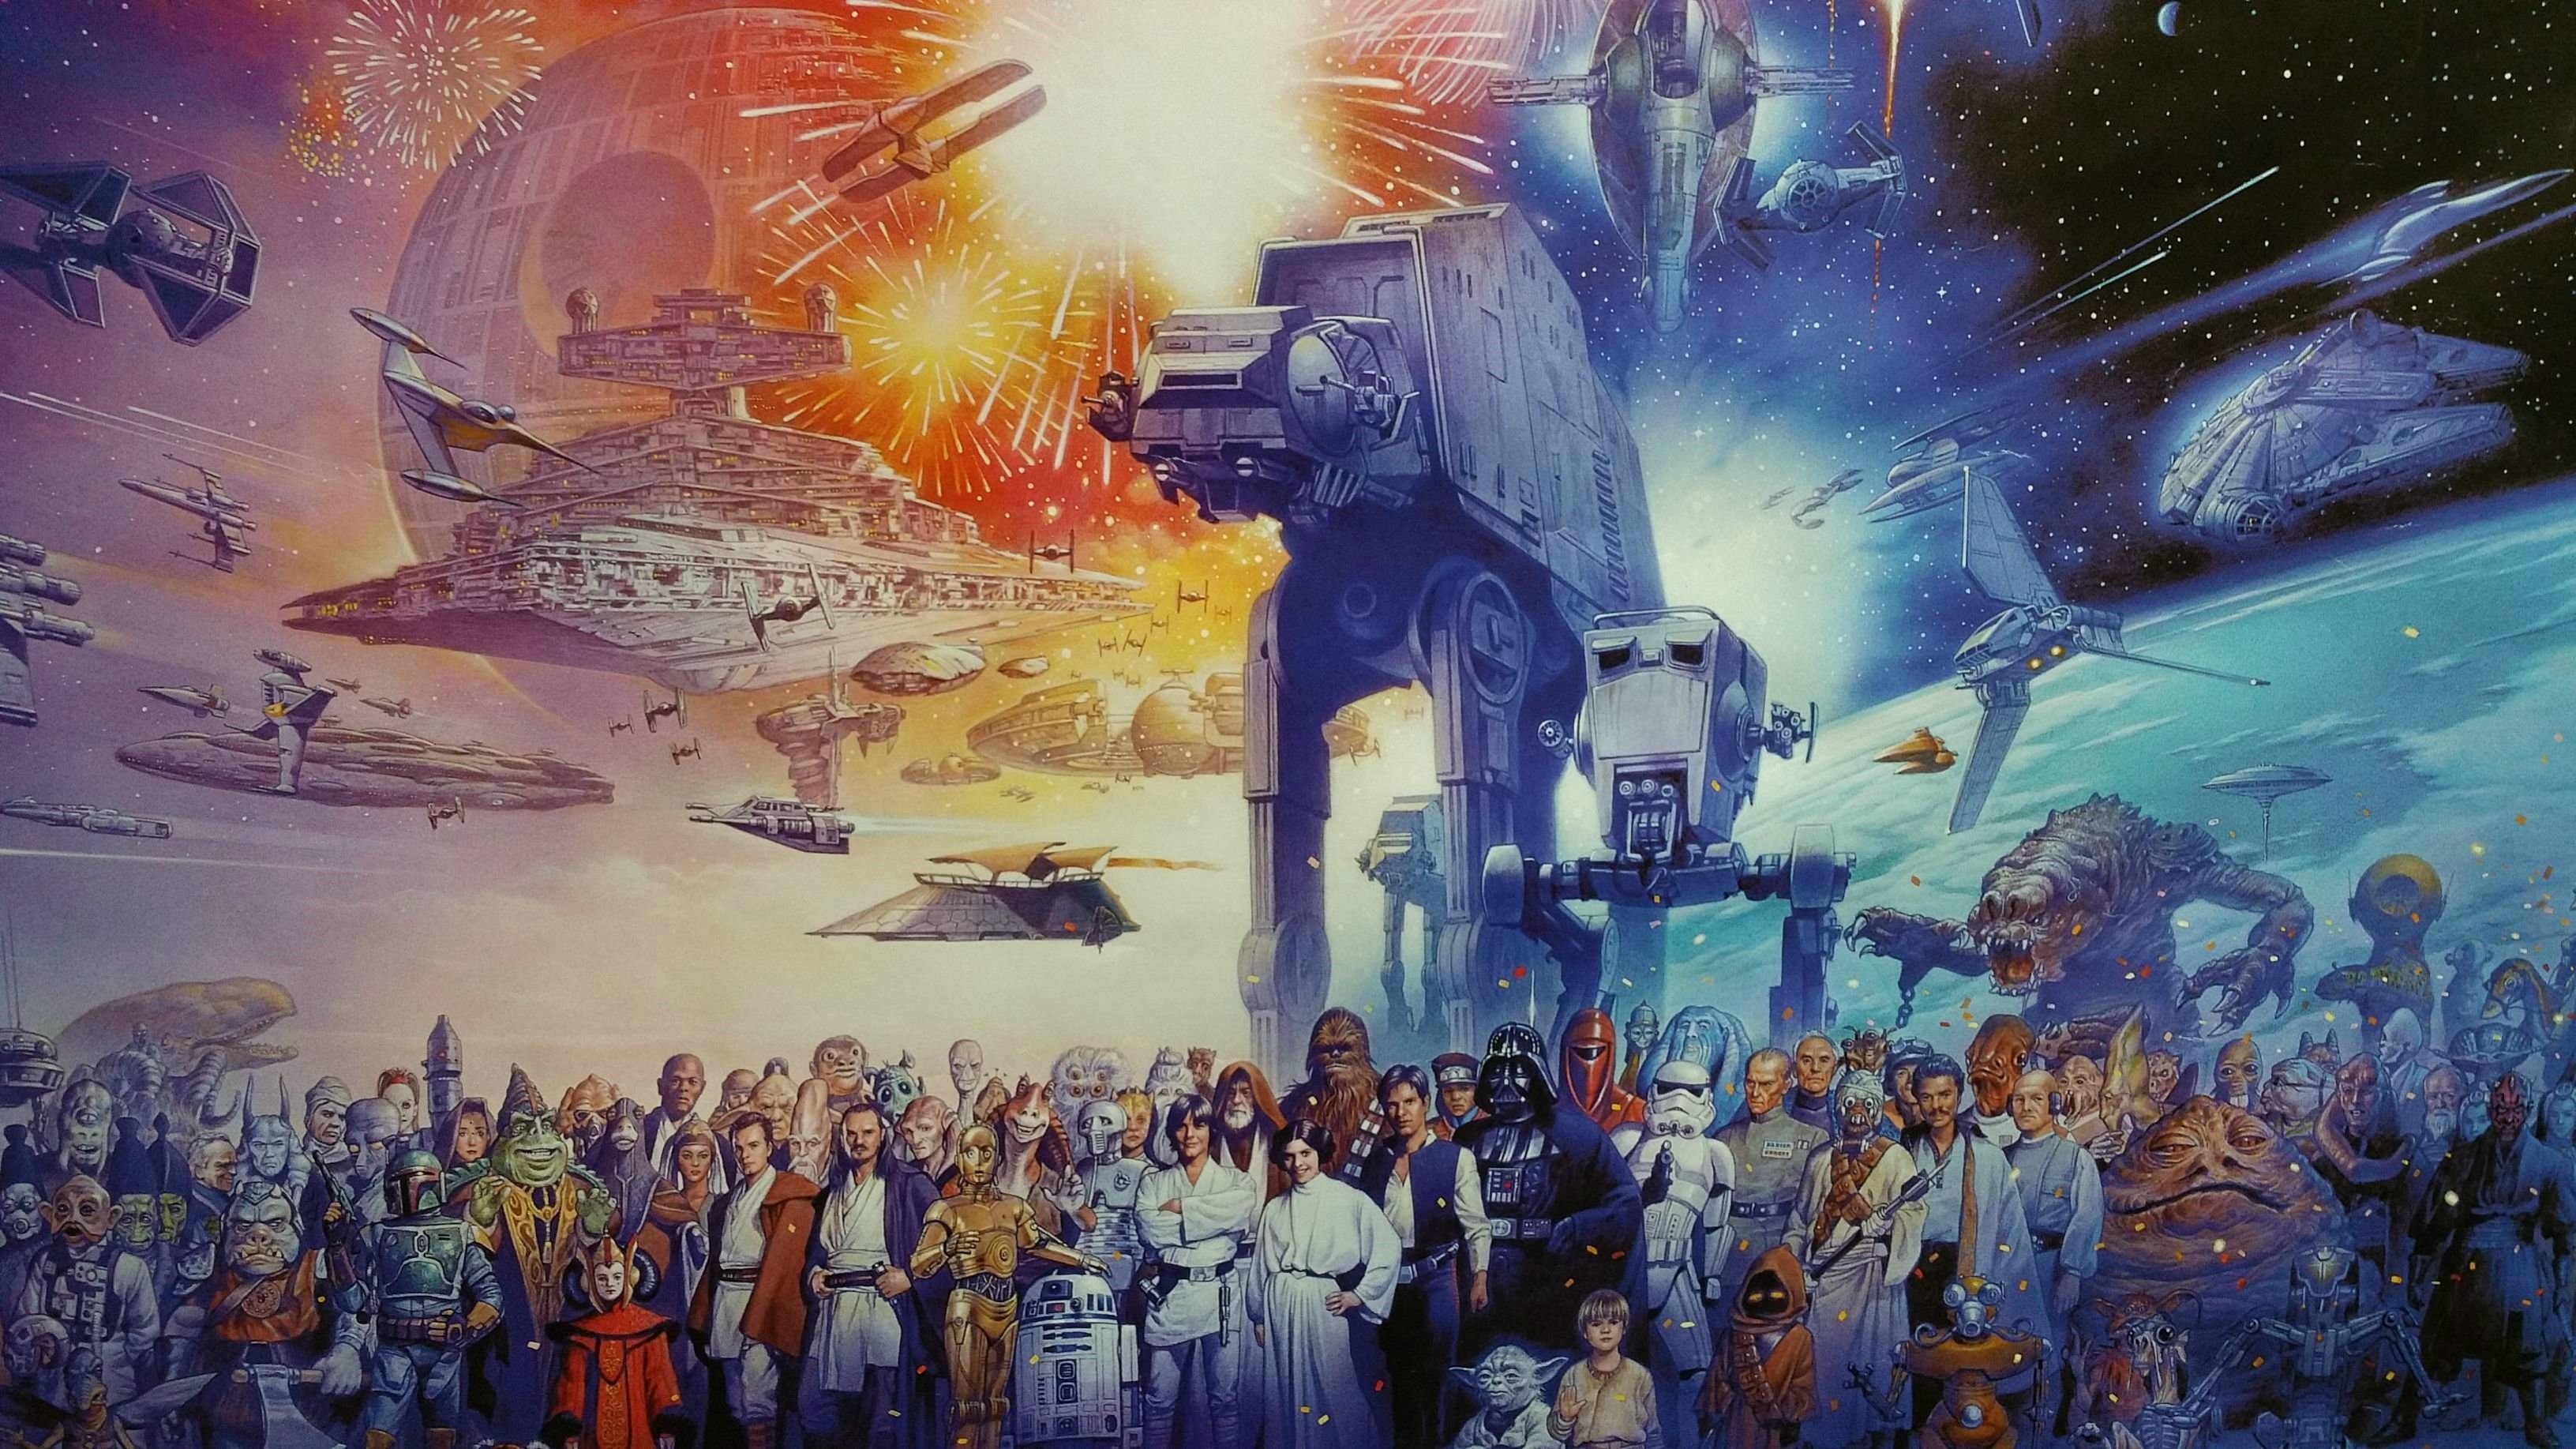 Hd Star Wars Wallpaper - 30 Star Wars Hd Wallpapers | stockpict